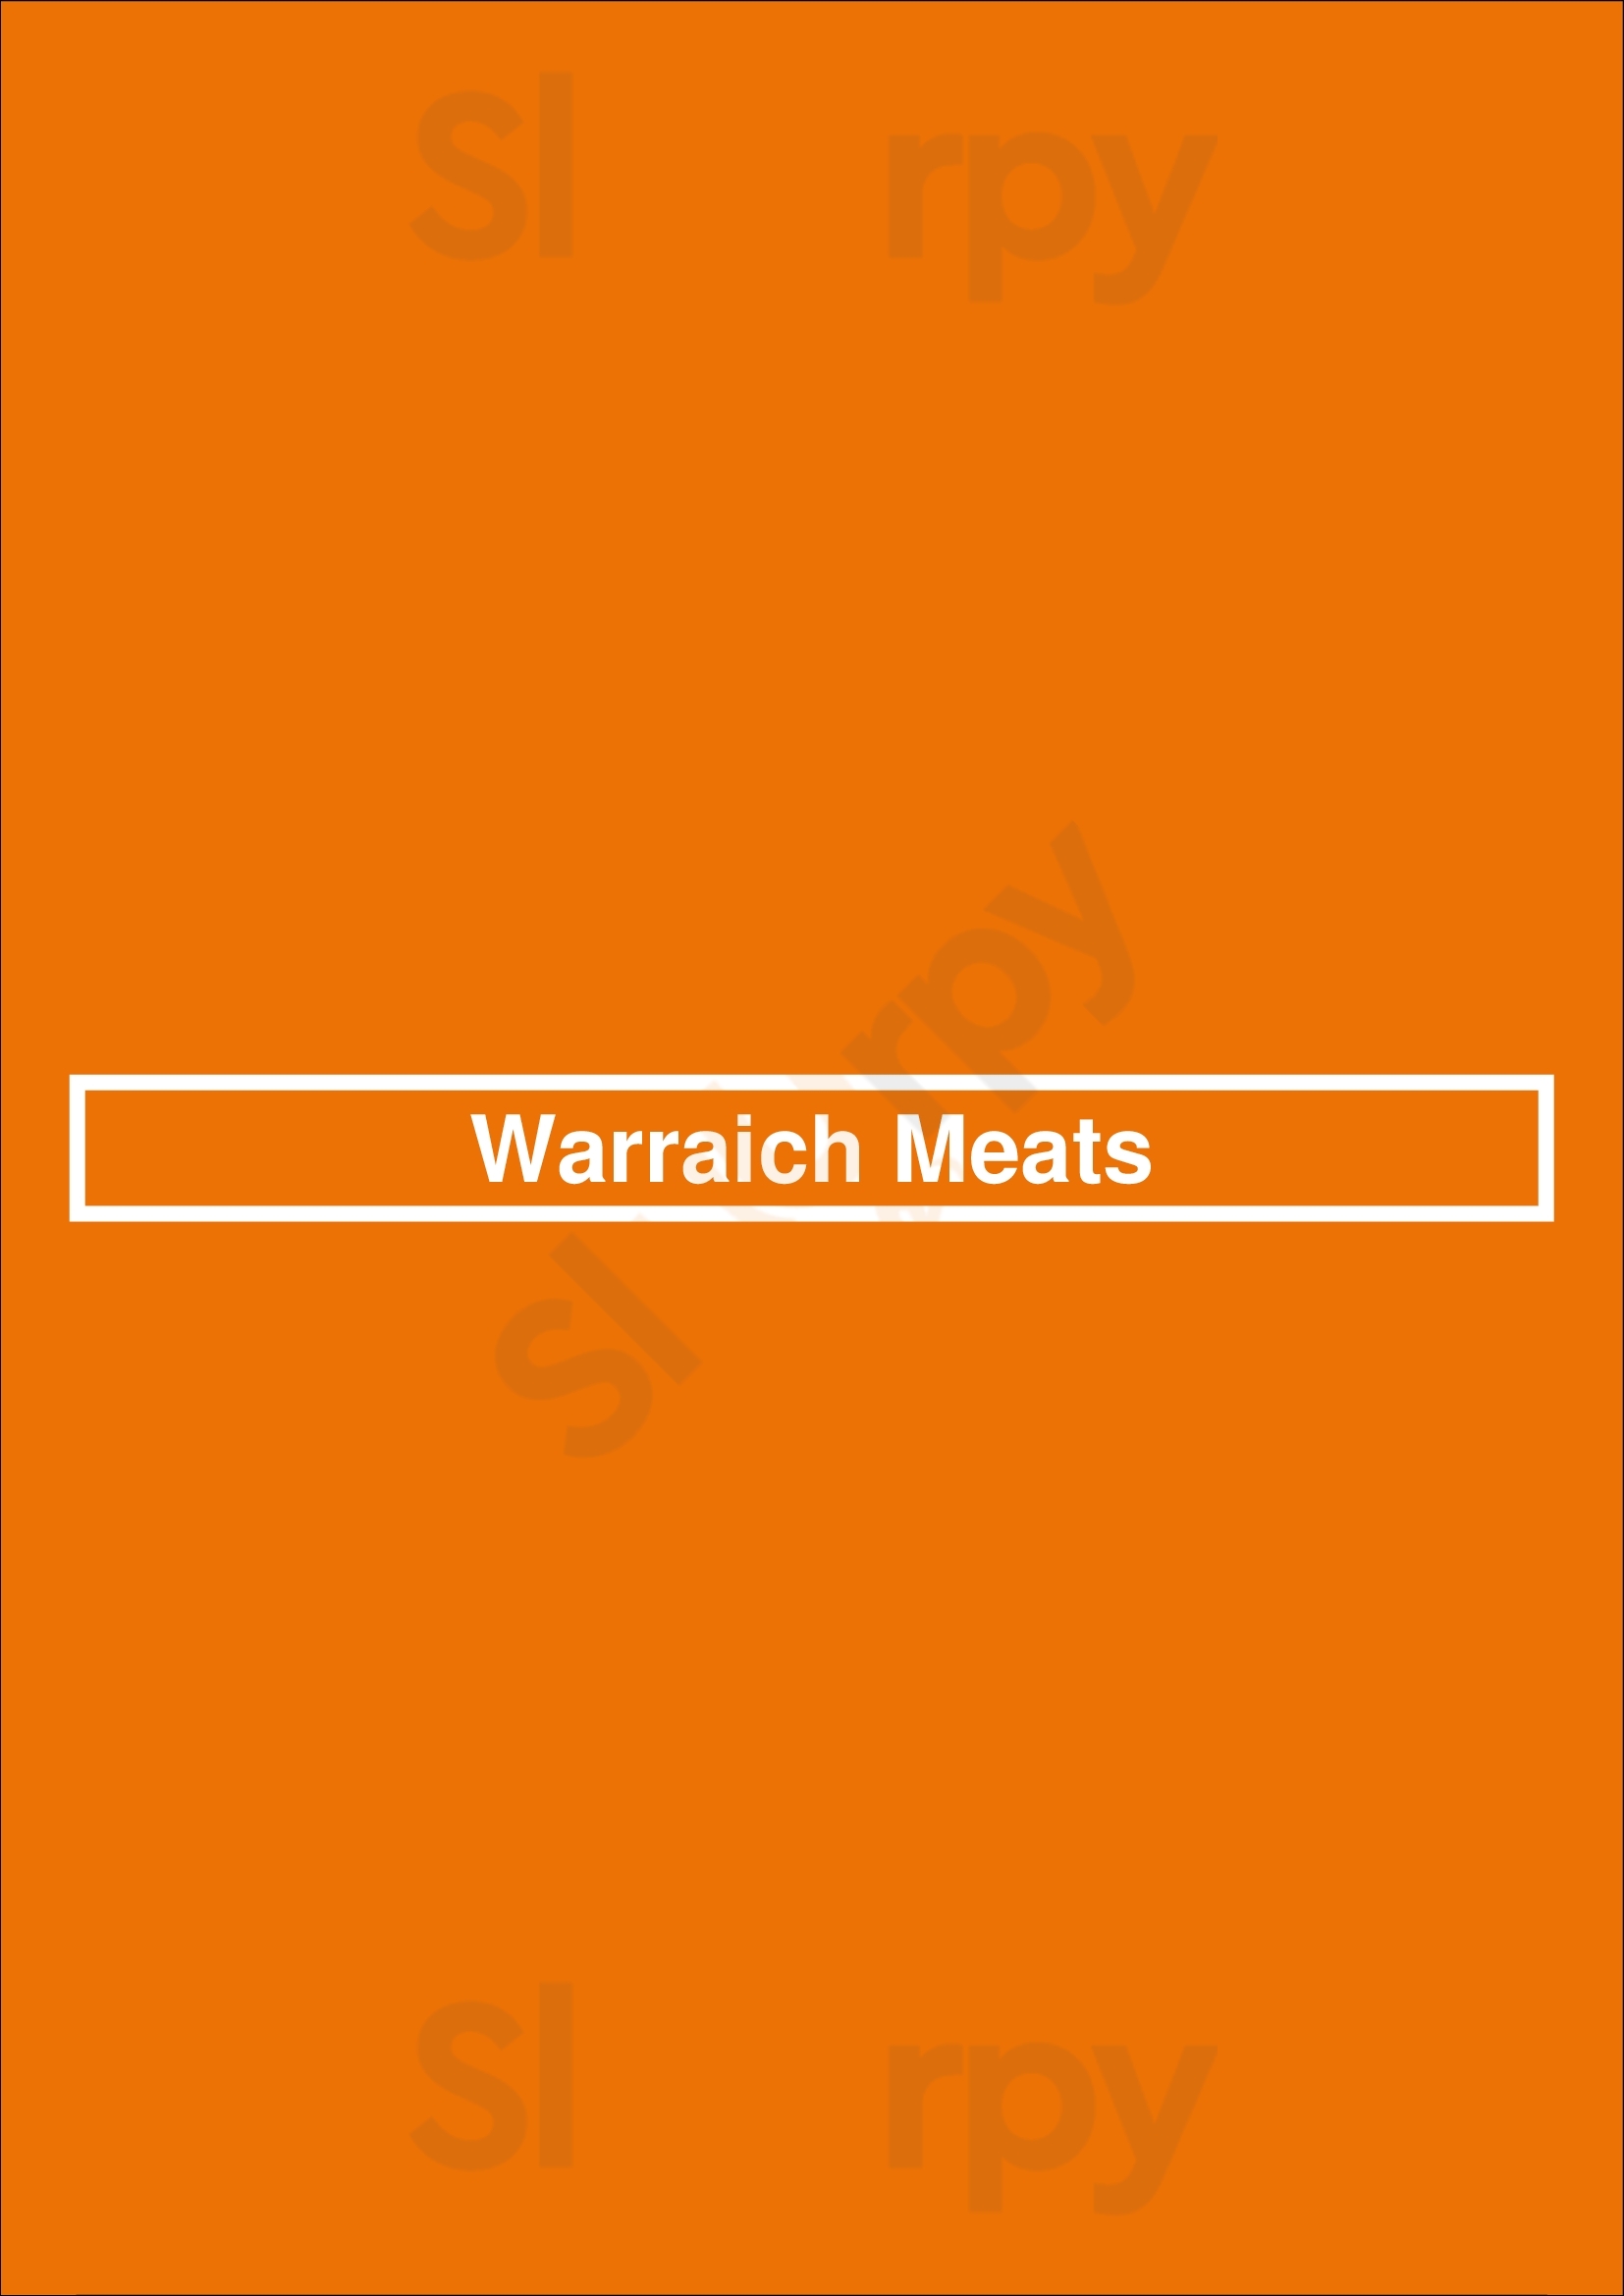 Warraich Meats Markham Menu - 1